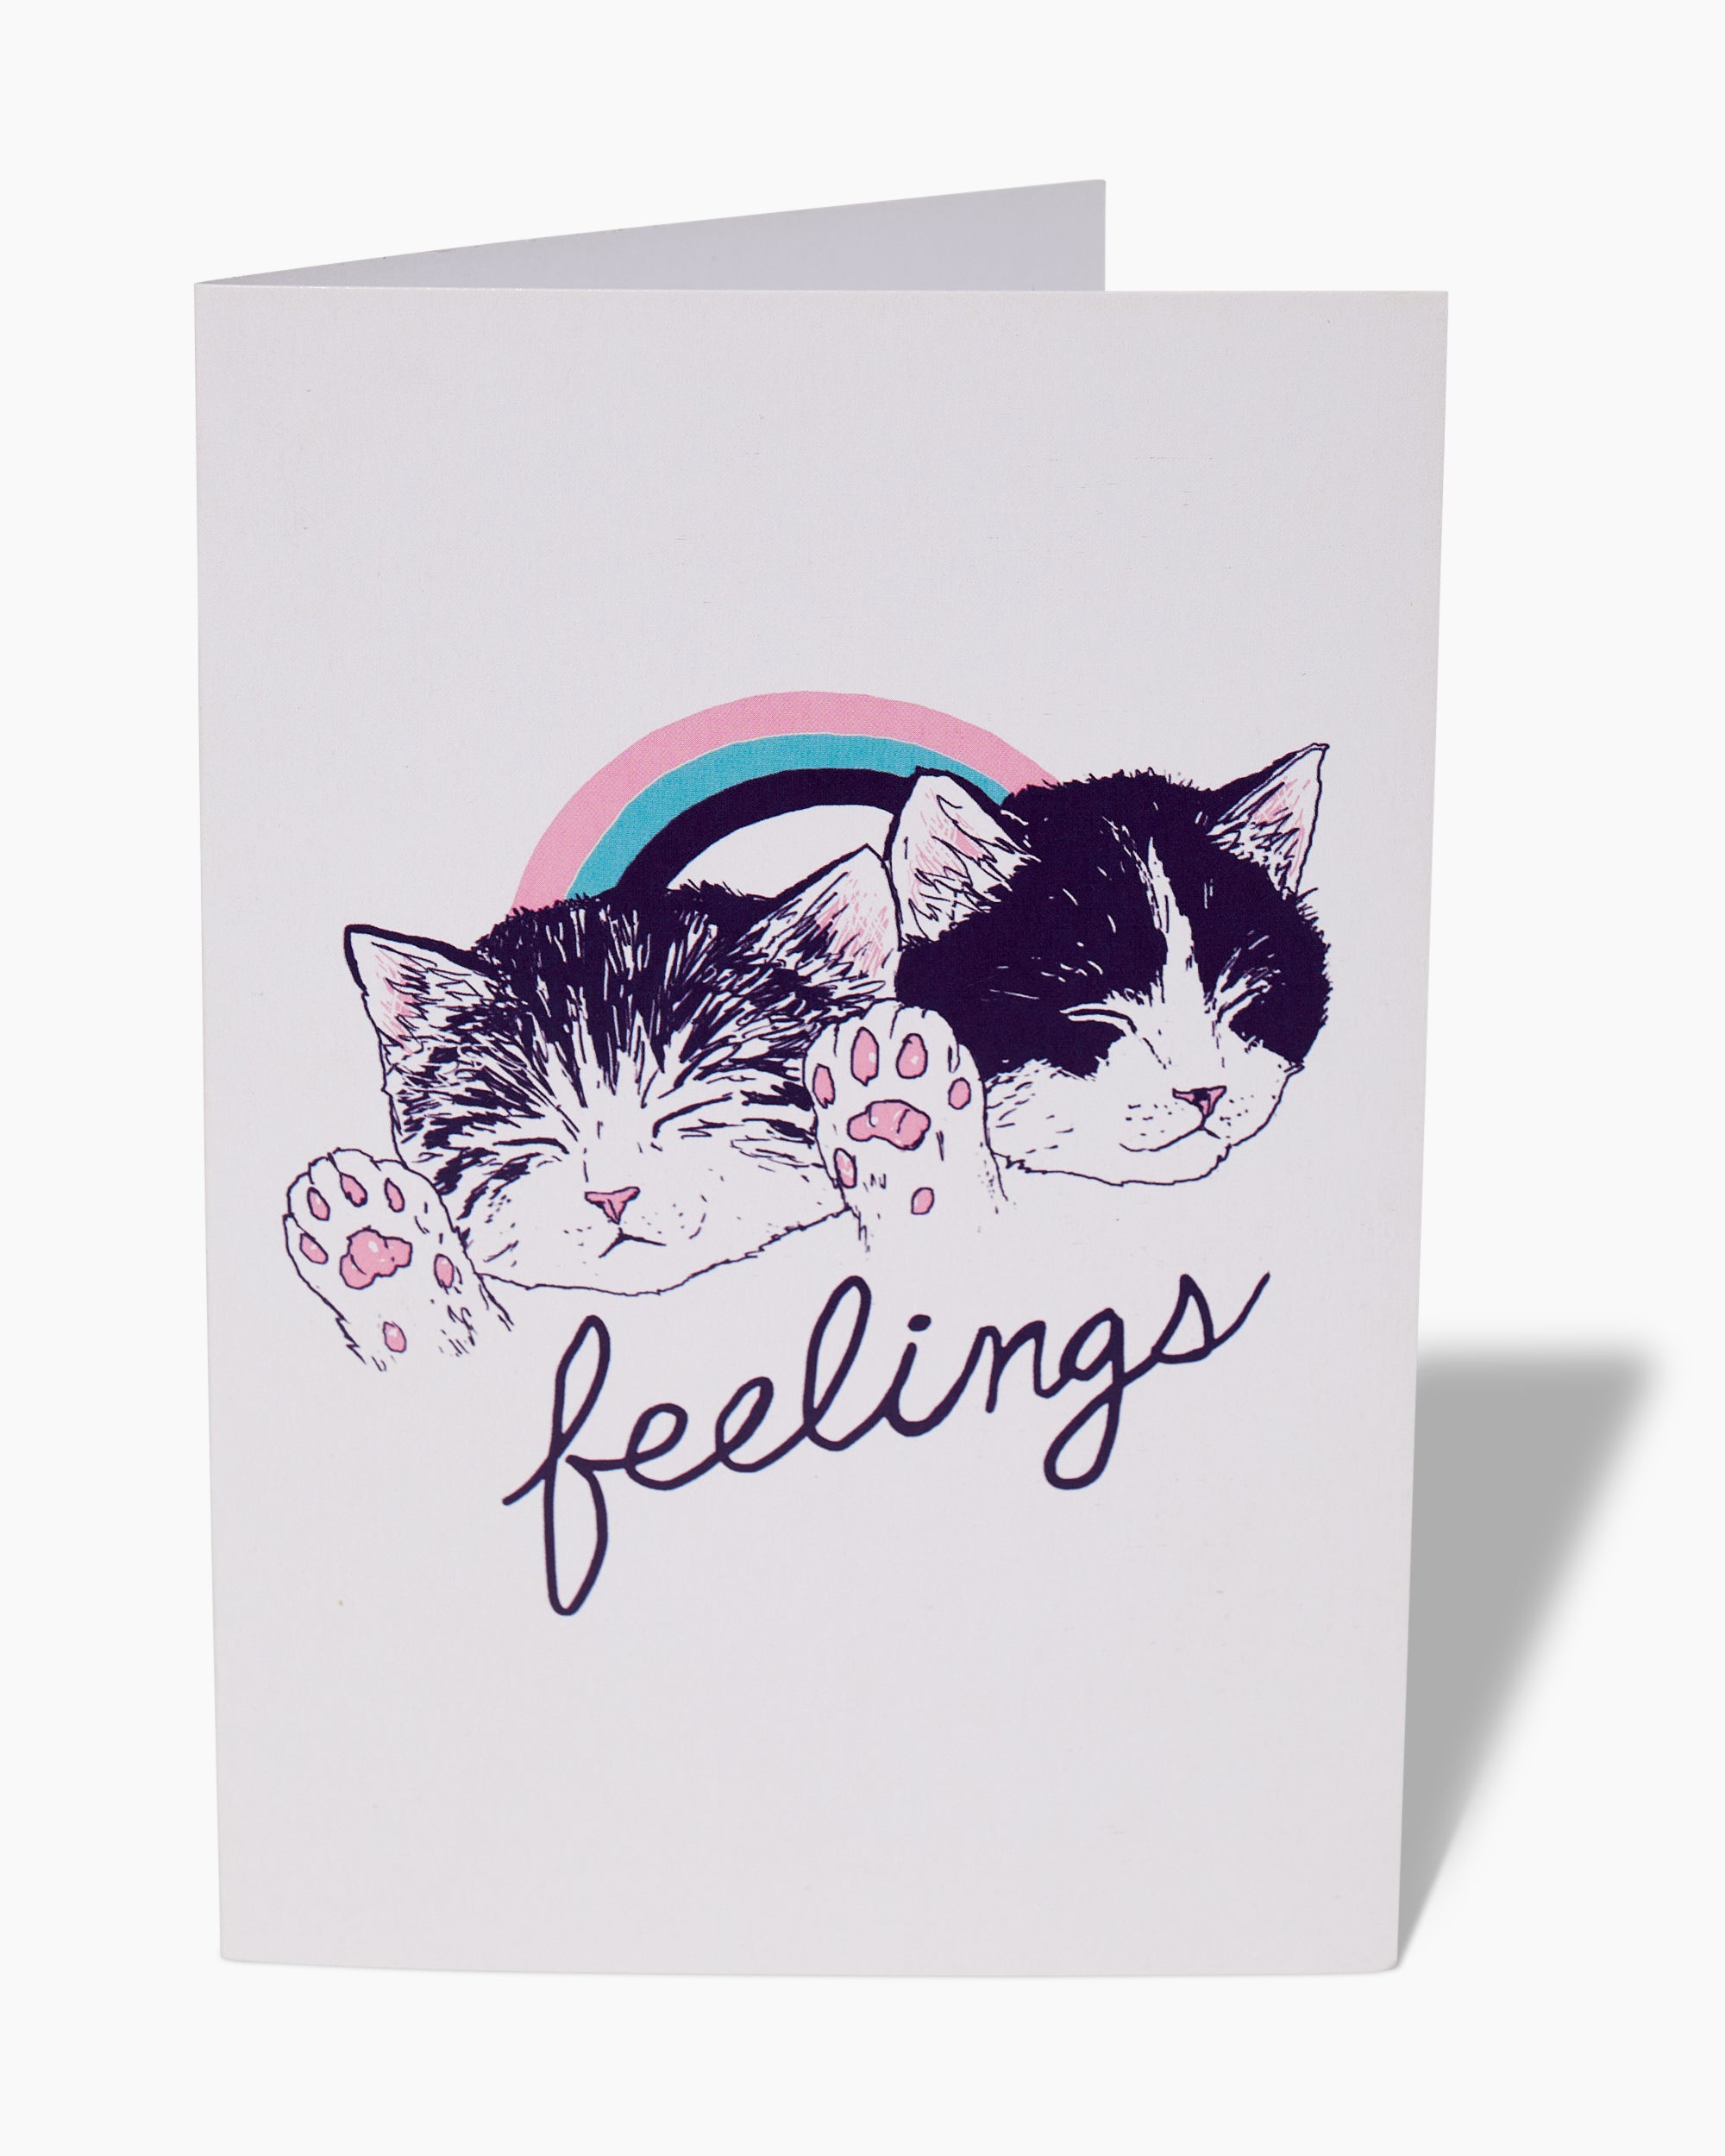 Feelings Greeting Card Australia Online